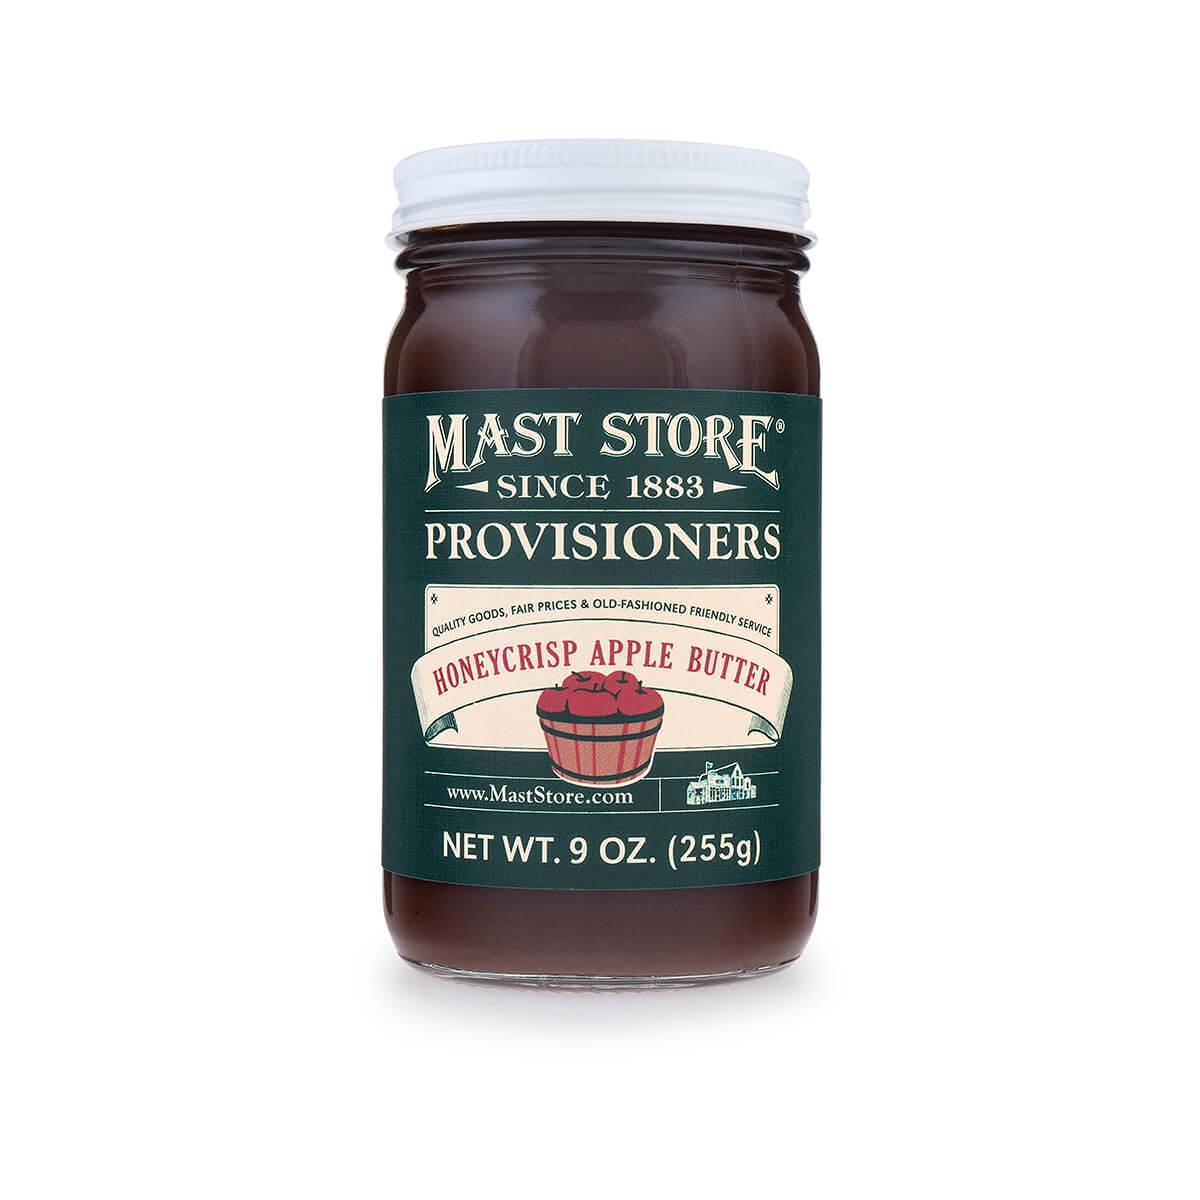  Mast Store Provisioners Honeycrisp Apple Butter - Half Pint